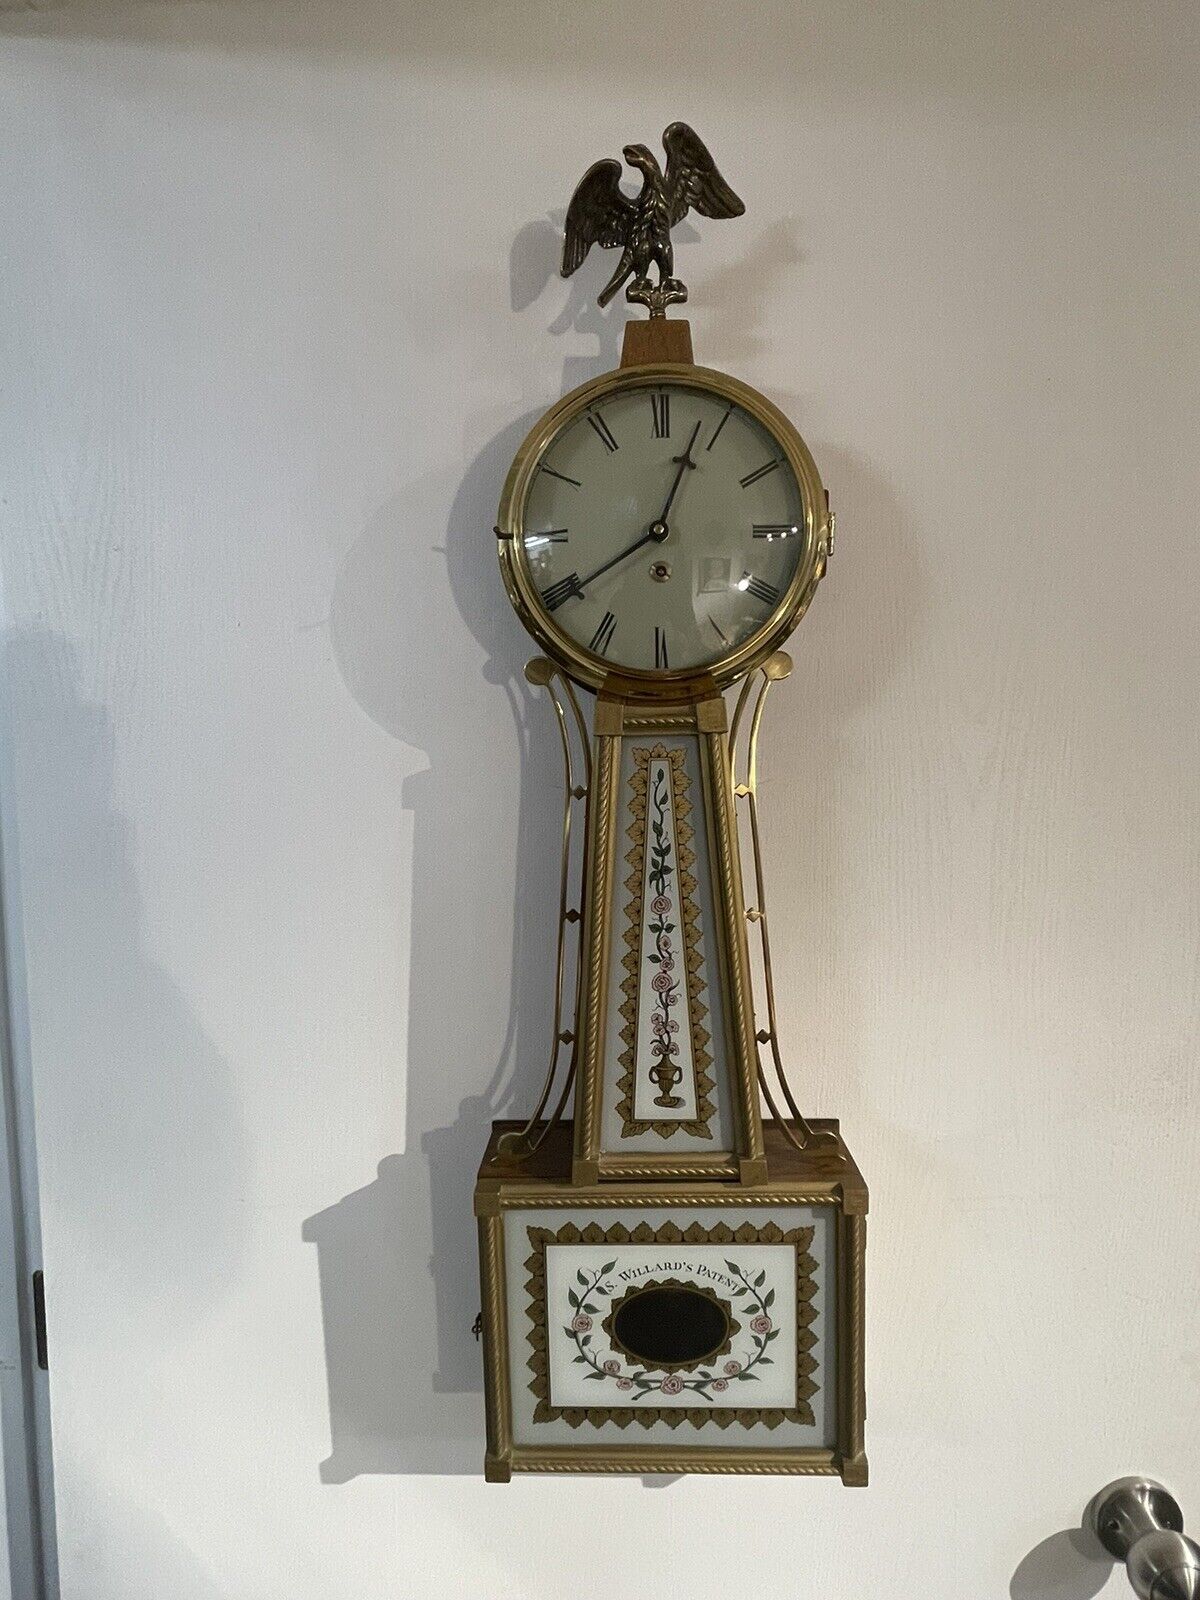 S Willards Patent Banjo Clock